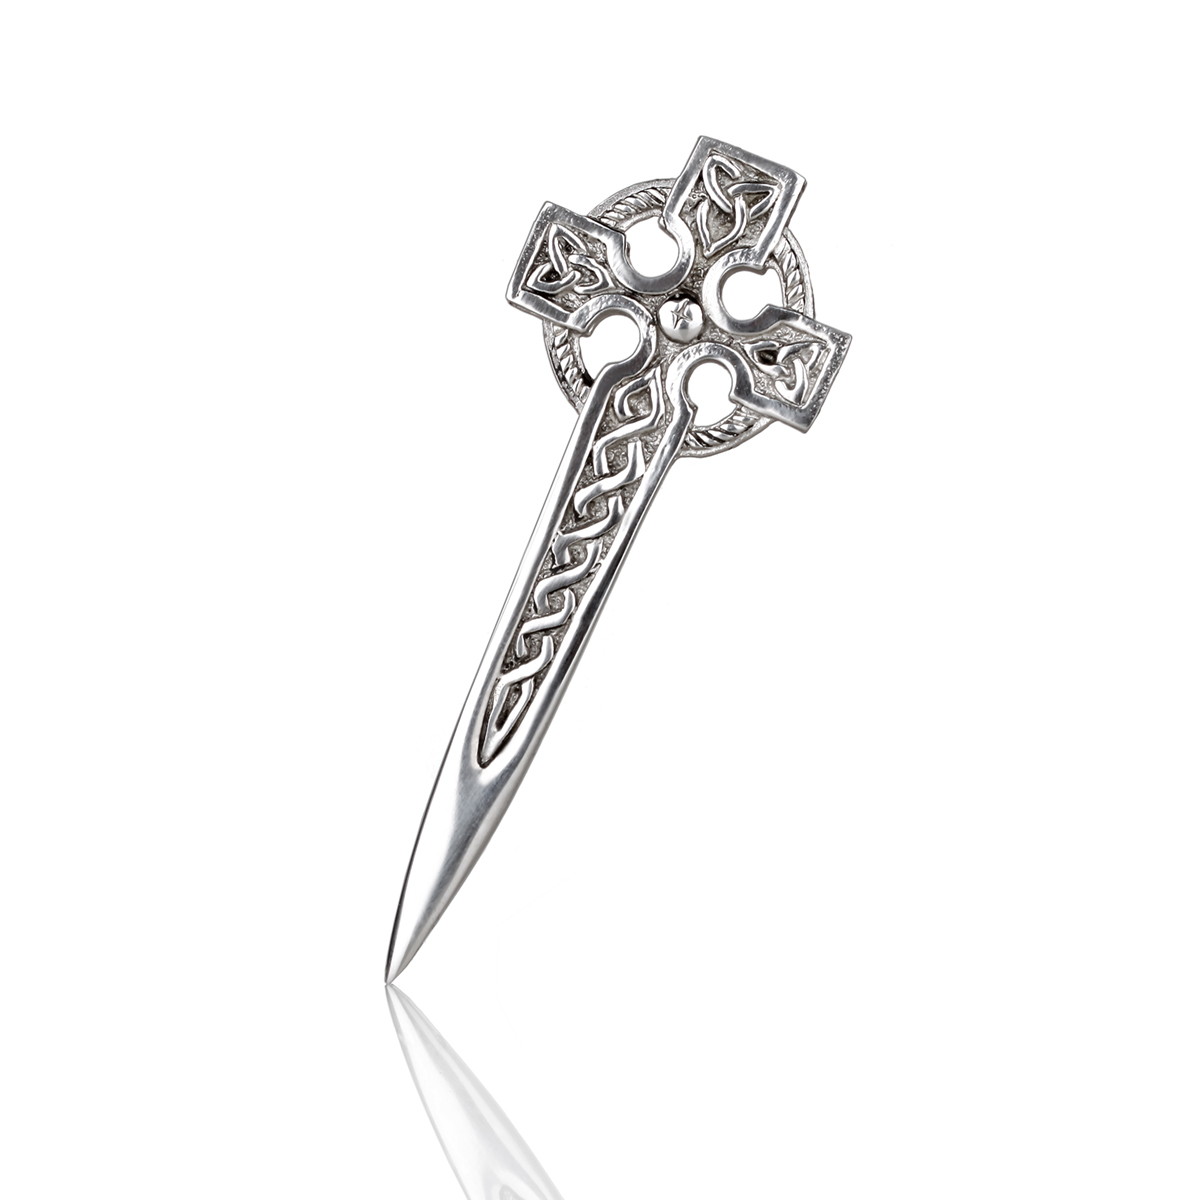 Trinity Cross Kilt Pin aus Schottland - Kreuz & keltische Ornamente